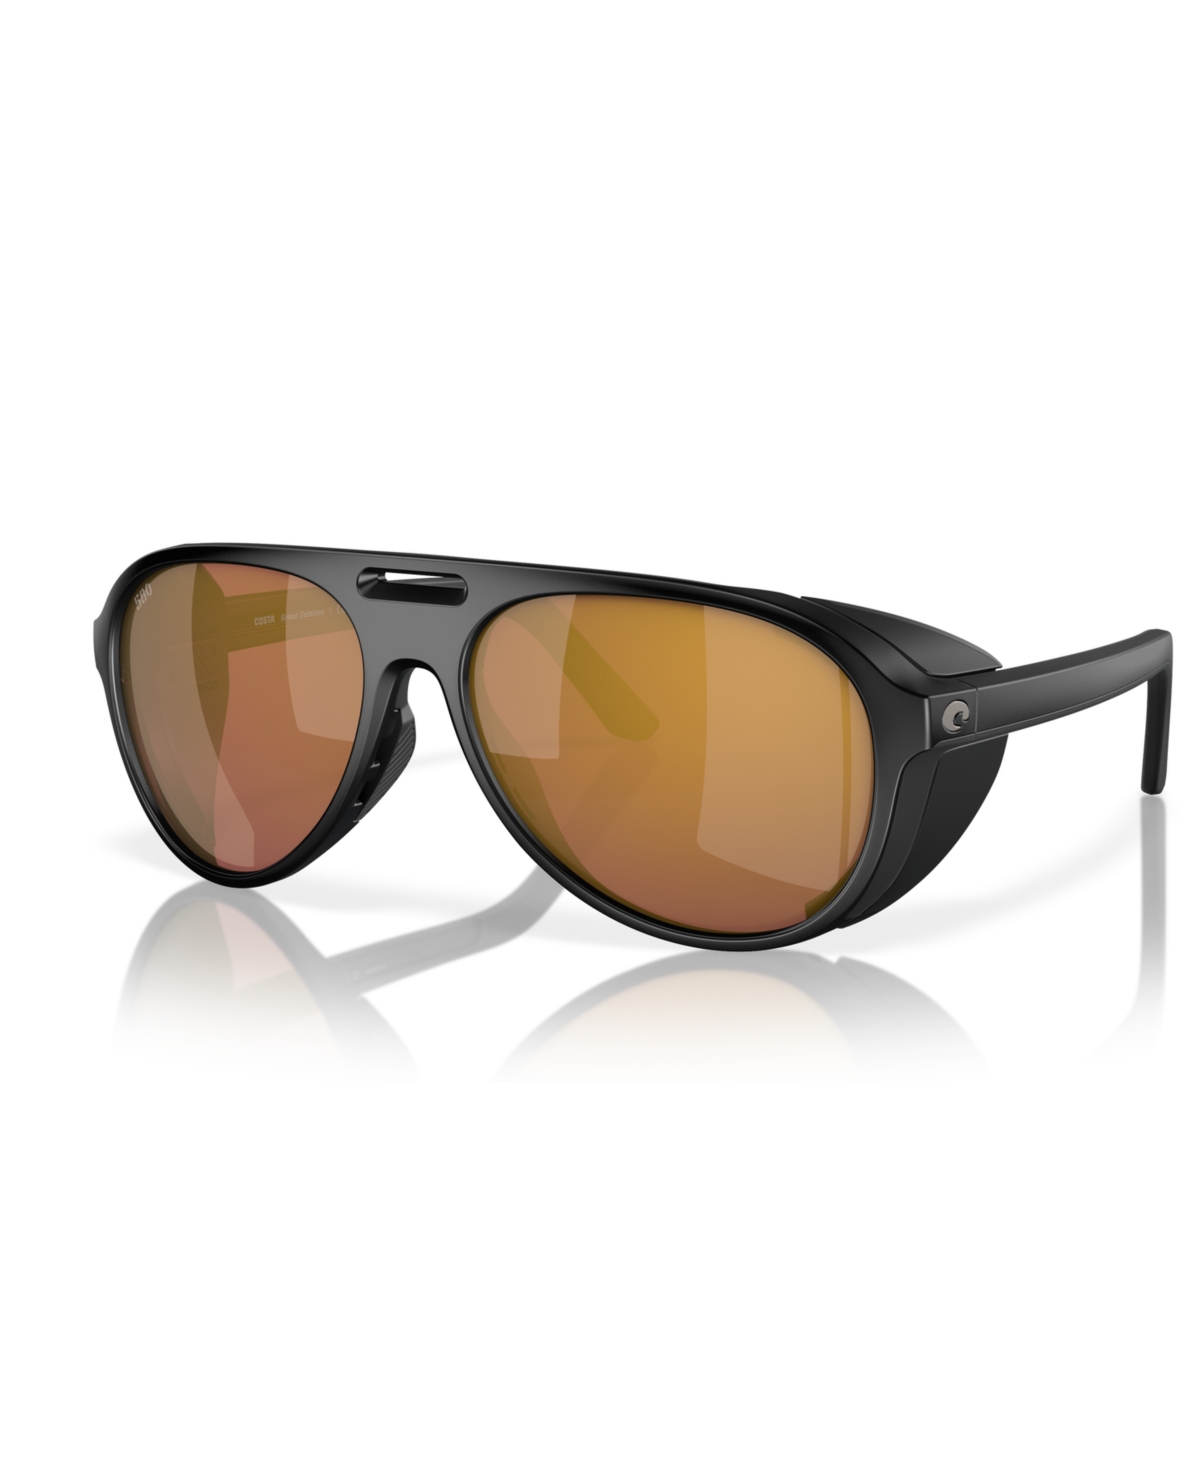 Men's Polarized Sunglasses, Grand Catalina 6S9117 - Matte Black, Gold